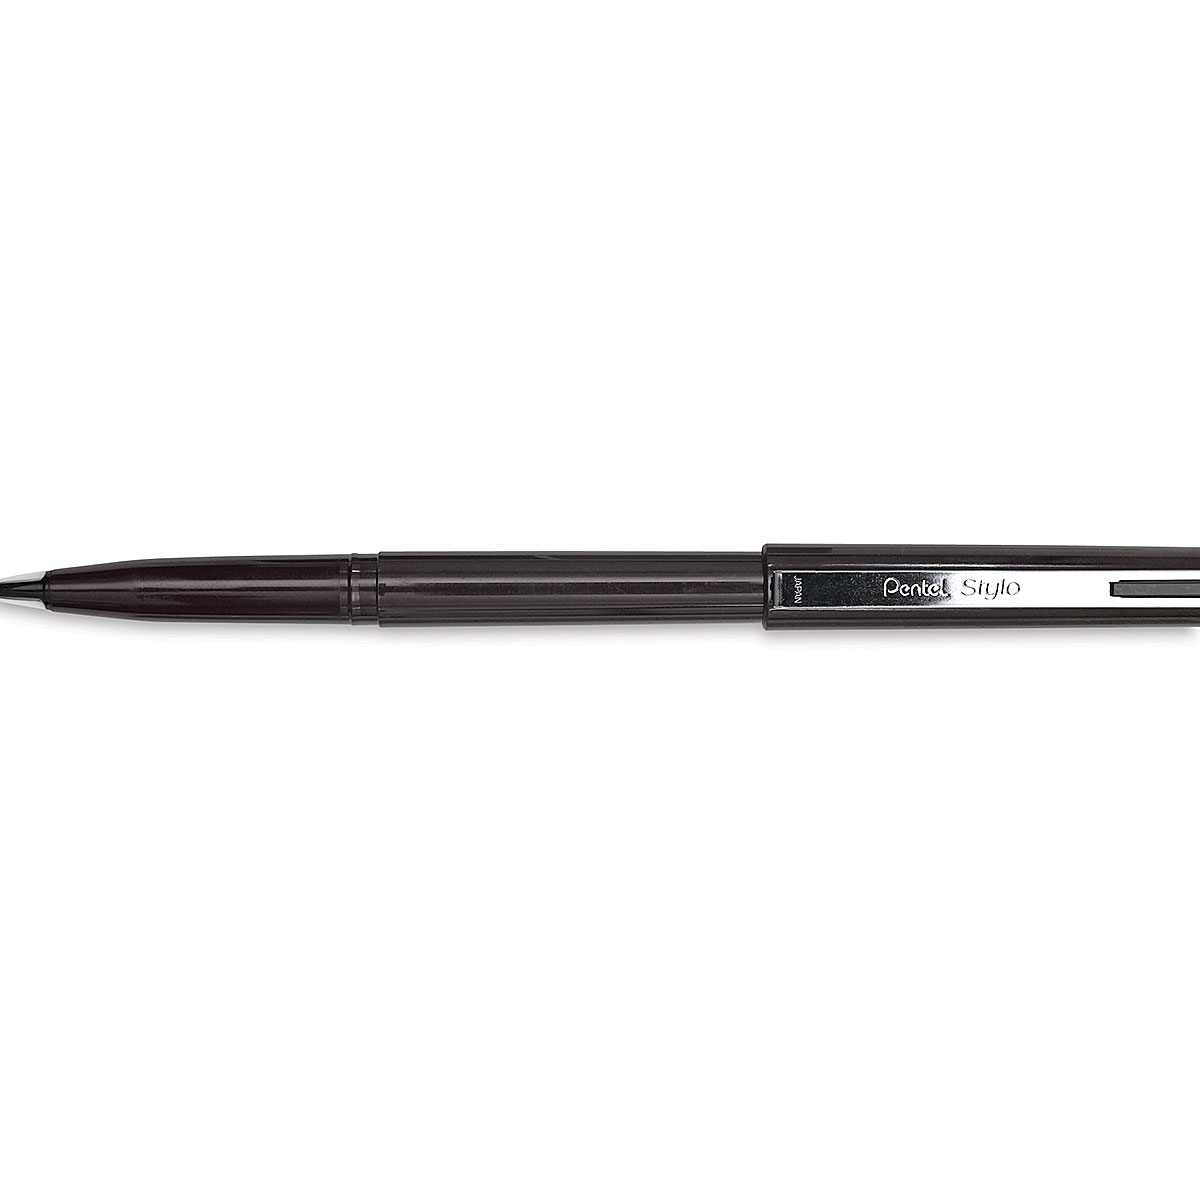 Pentel Hybrid Technica Pen Set 5 Pens